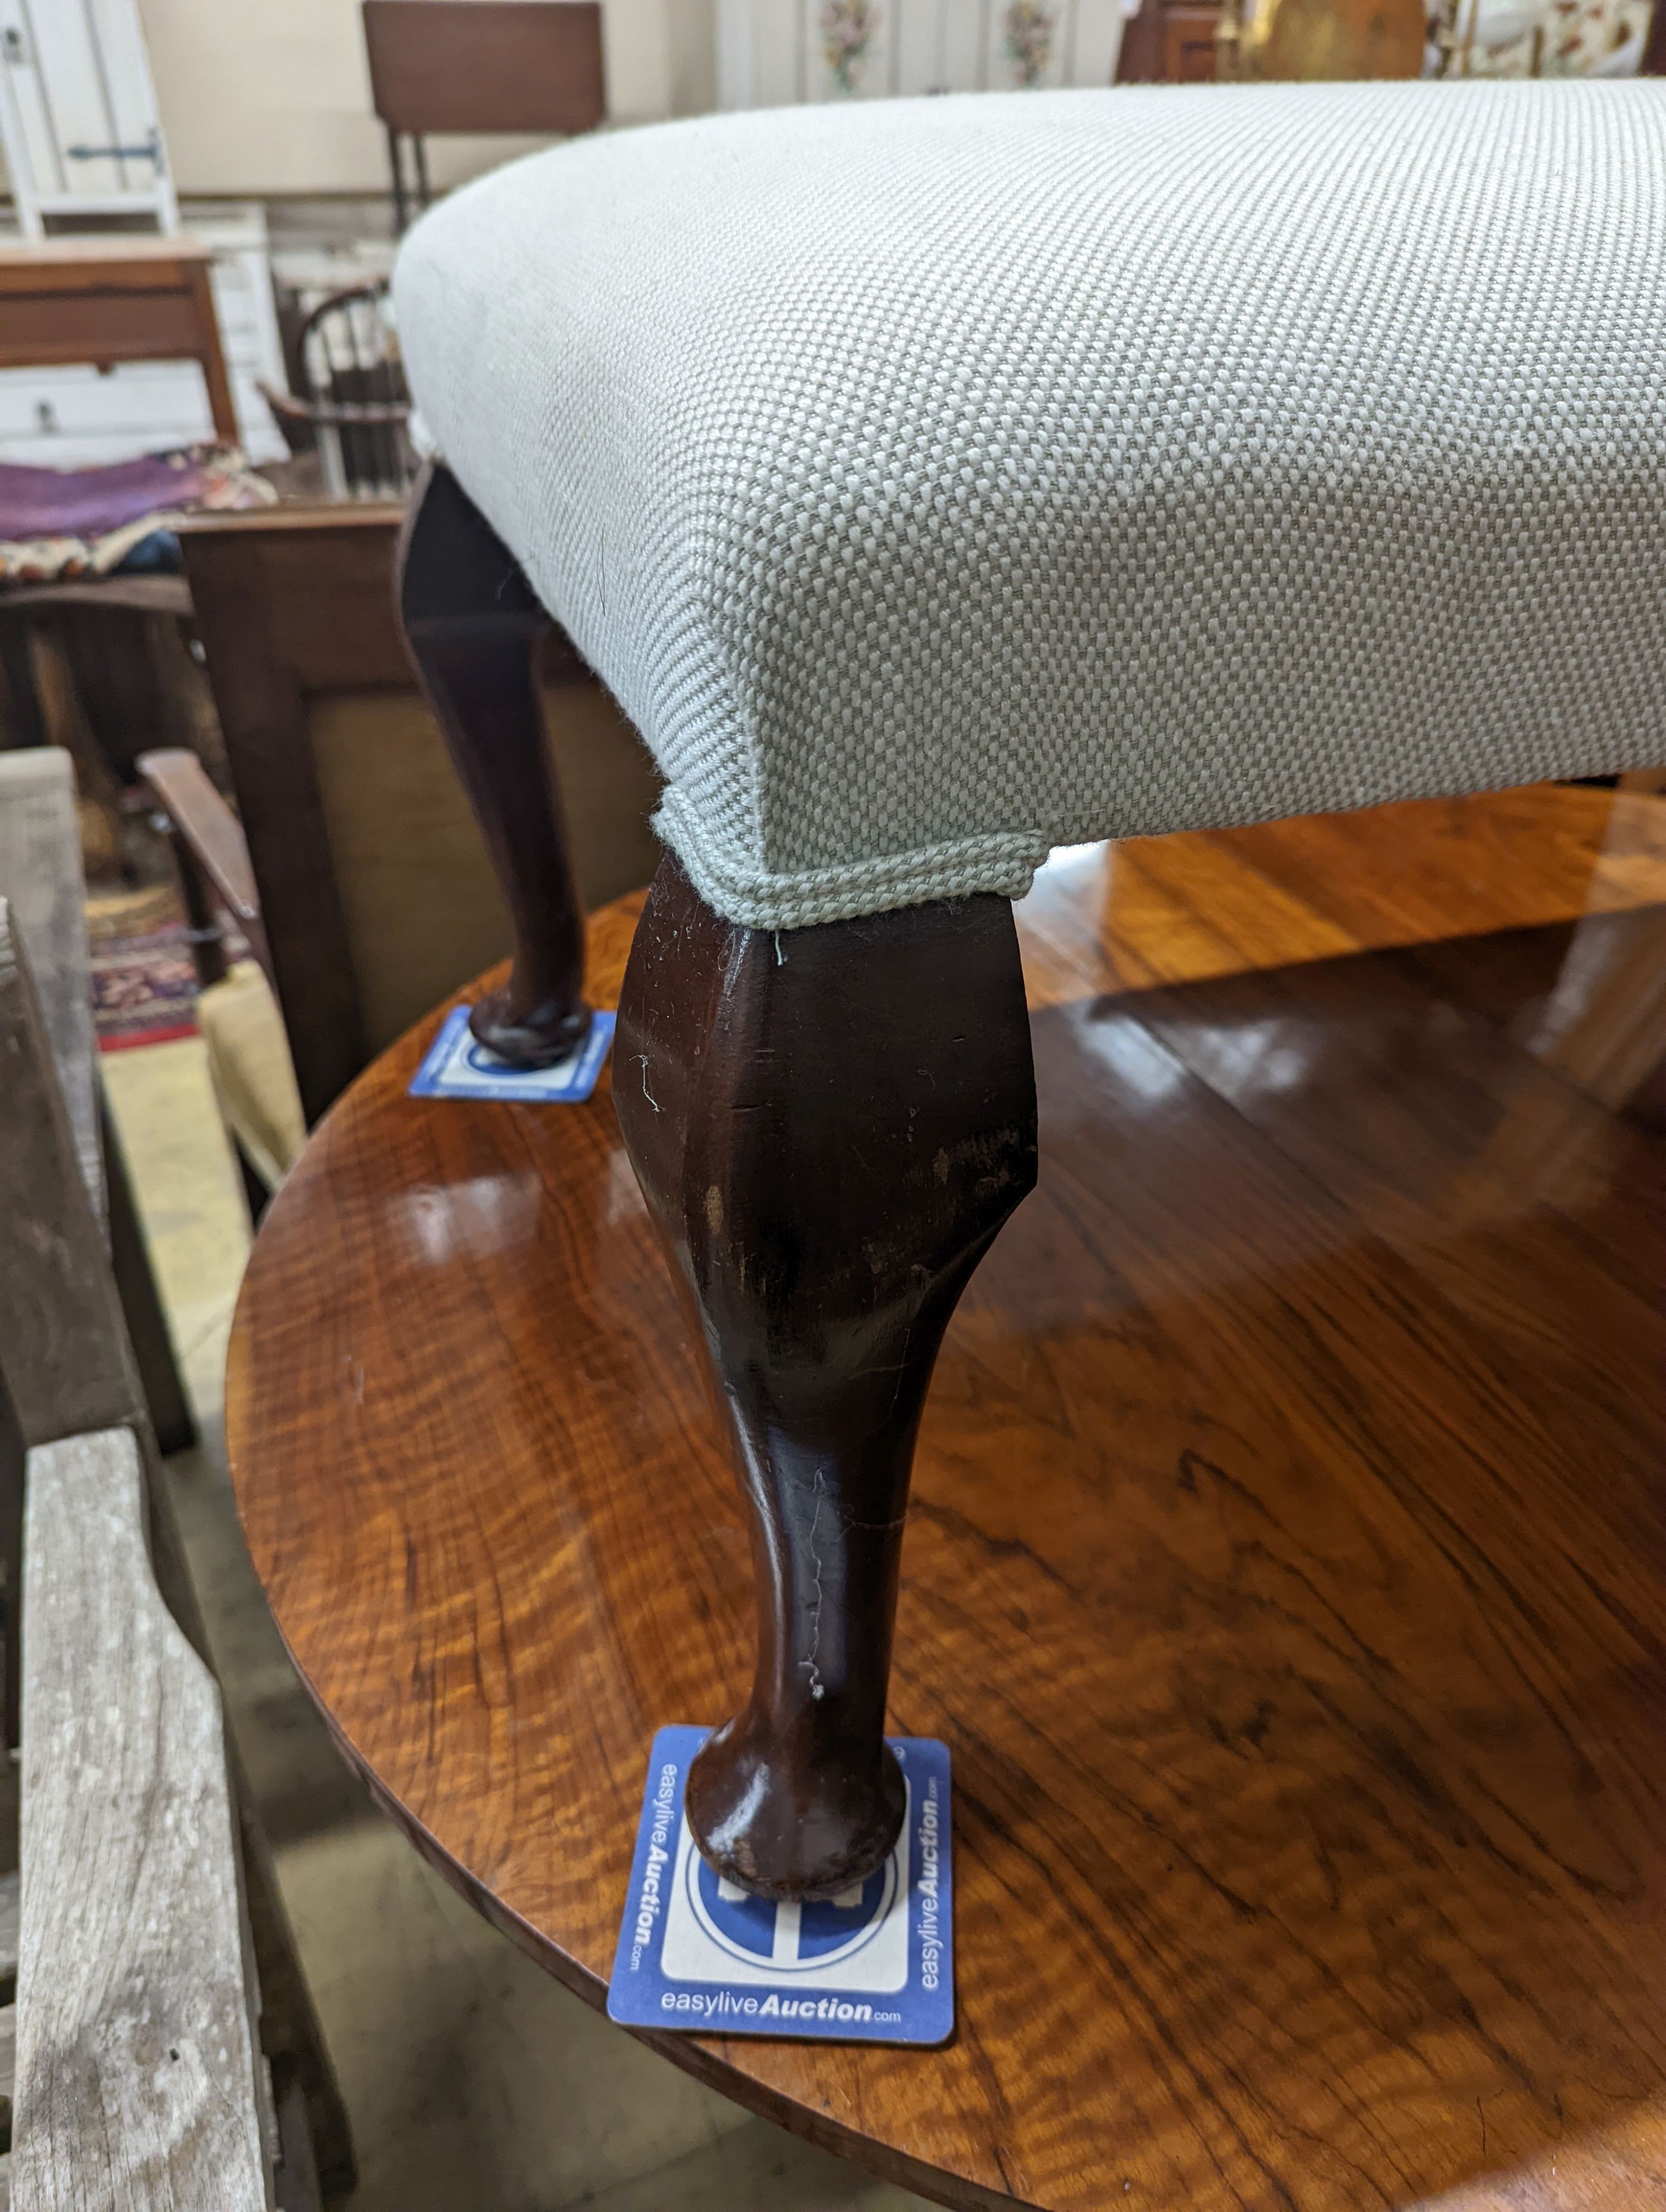 An early 20th century rectangular upholstered dressing stool, length 94cm, depth 54cm, height 42cm